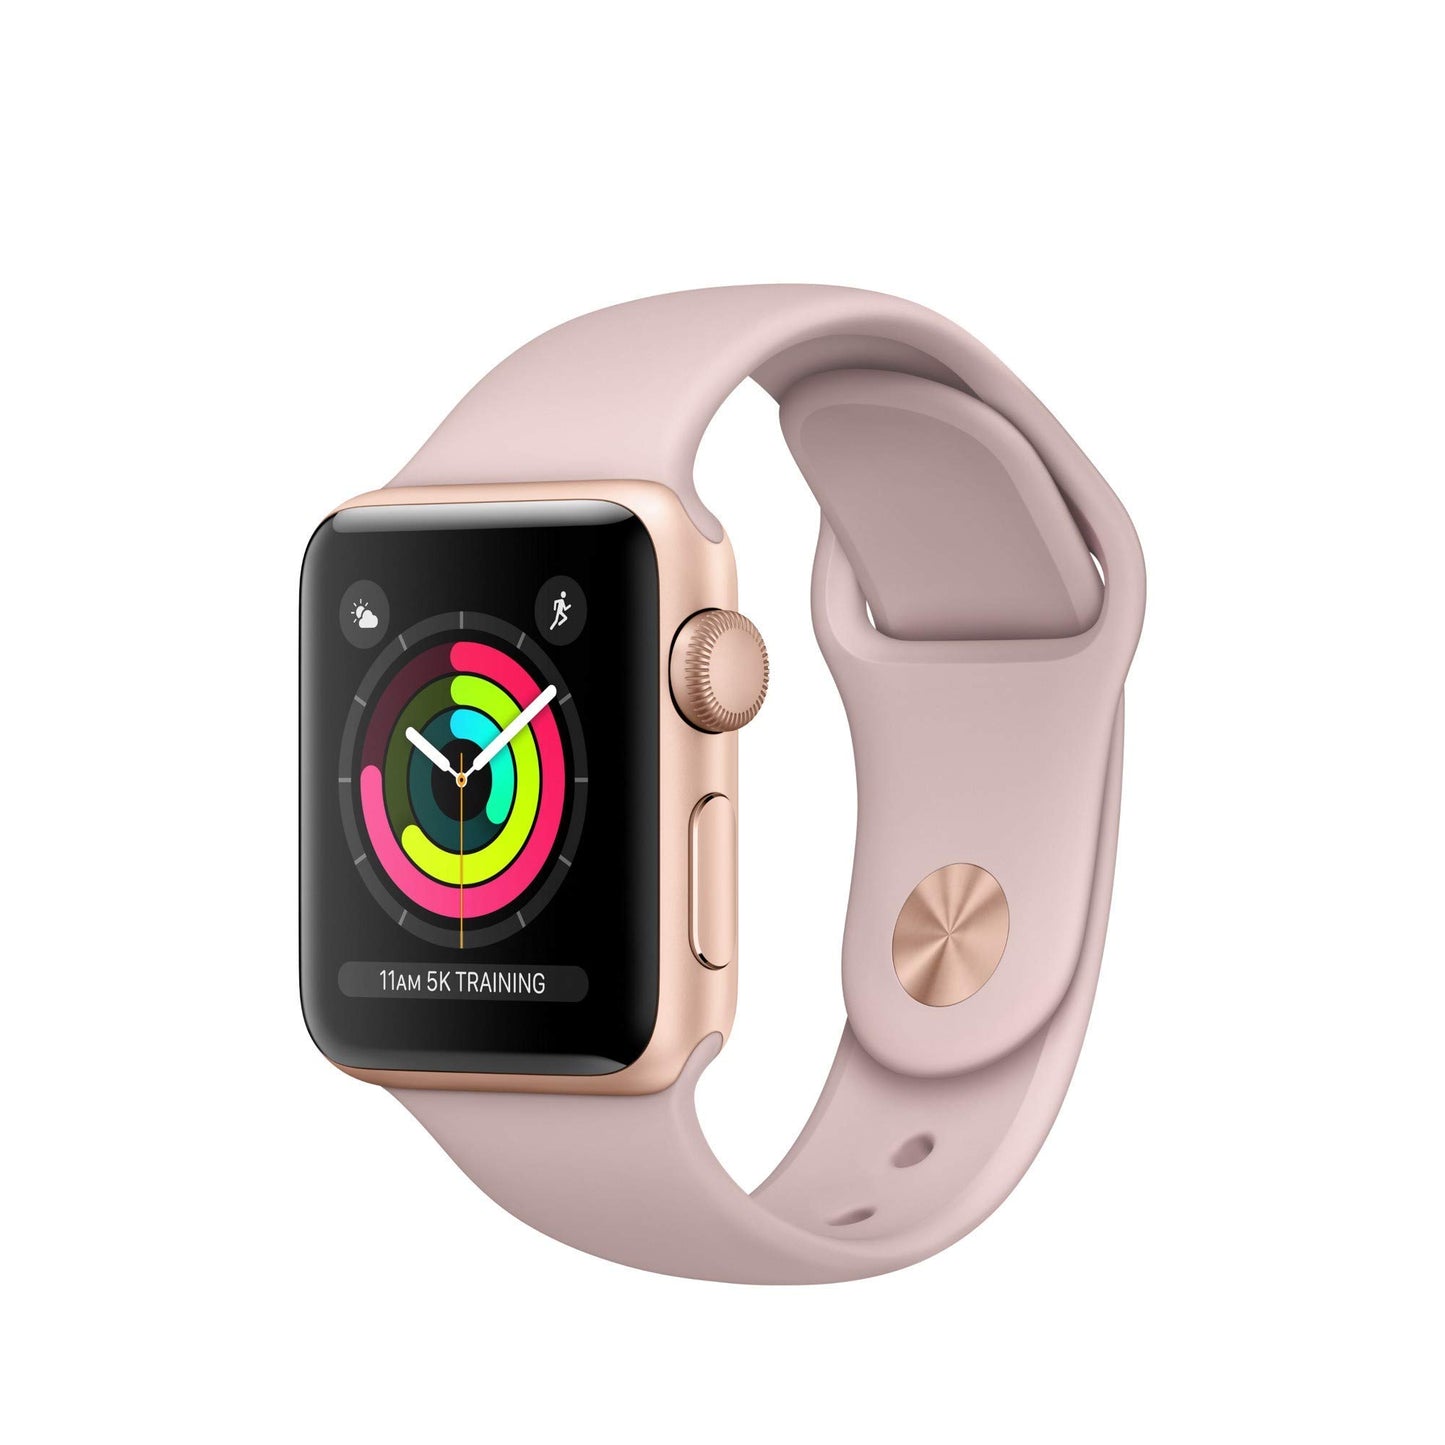 Apple Watch Series 3 (GPS) Gold